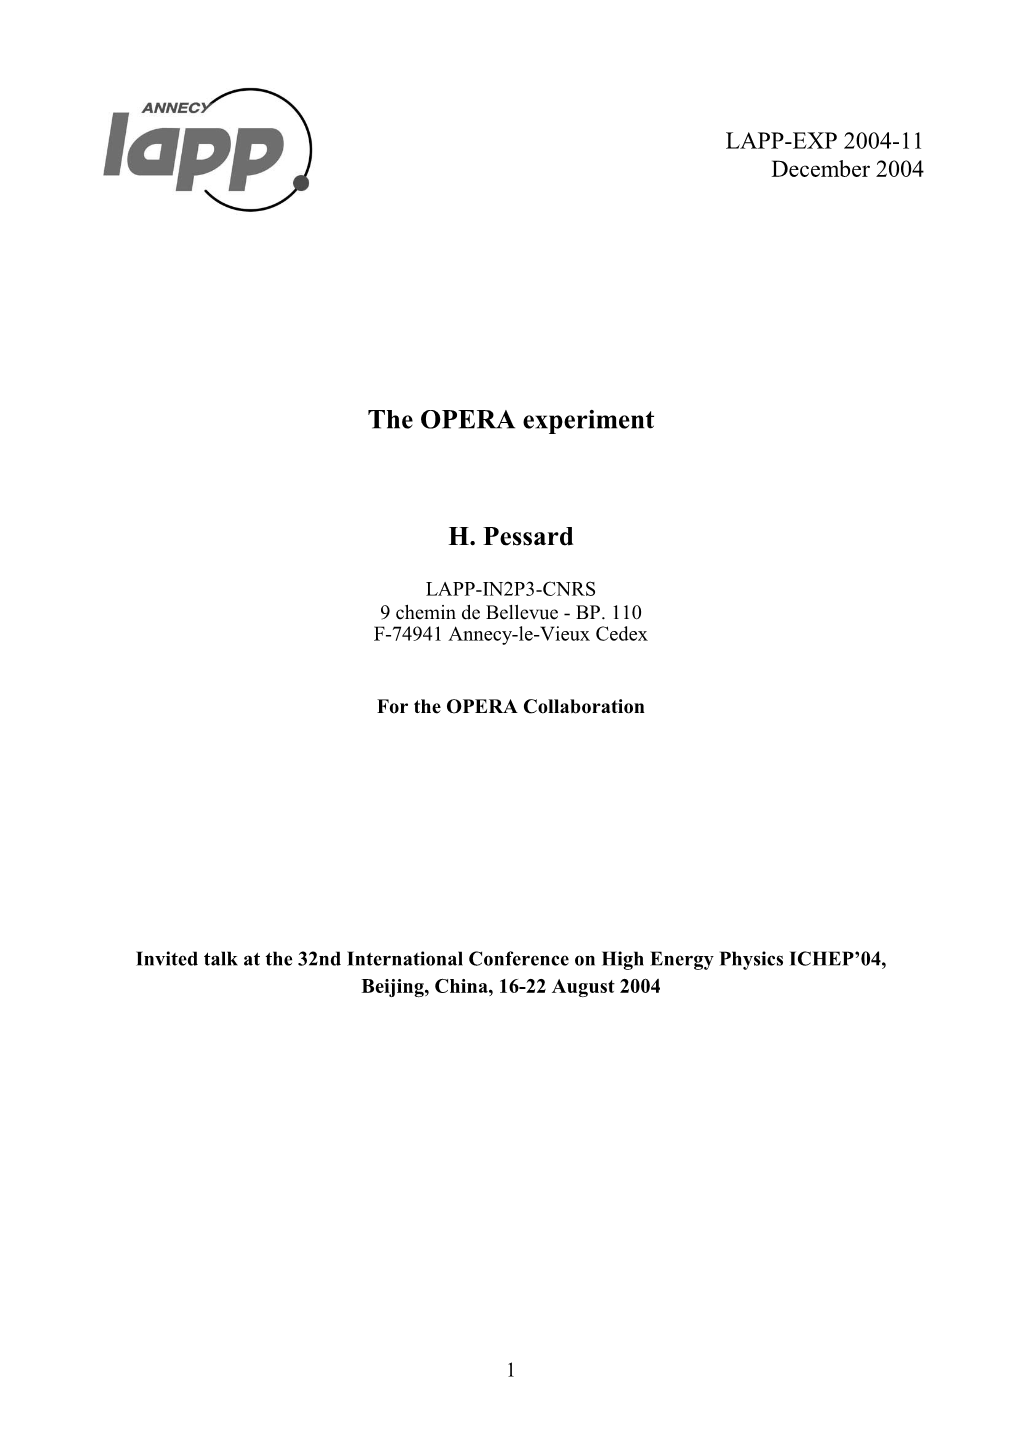 The OPERA Experiment H. Pessard